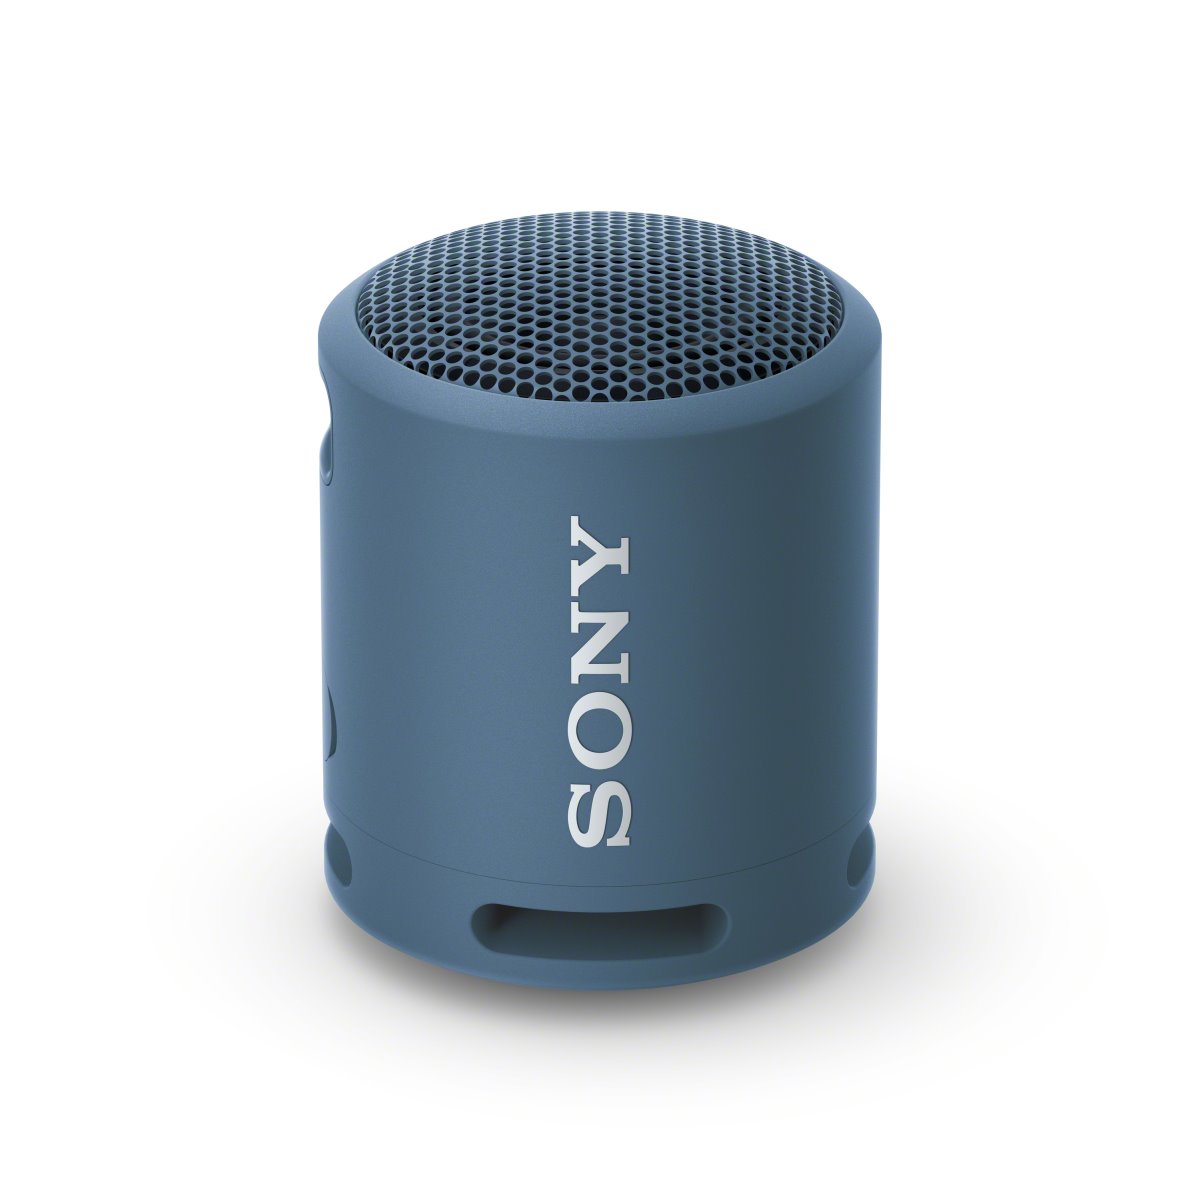 Sony SRS-XB13, modrá, model 2021